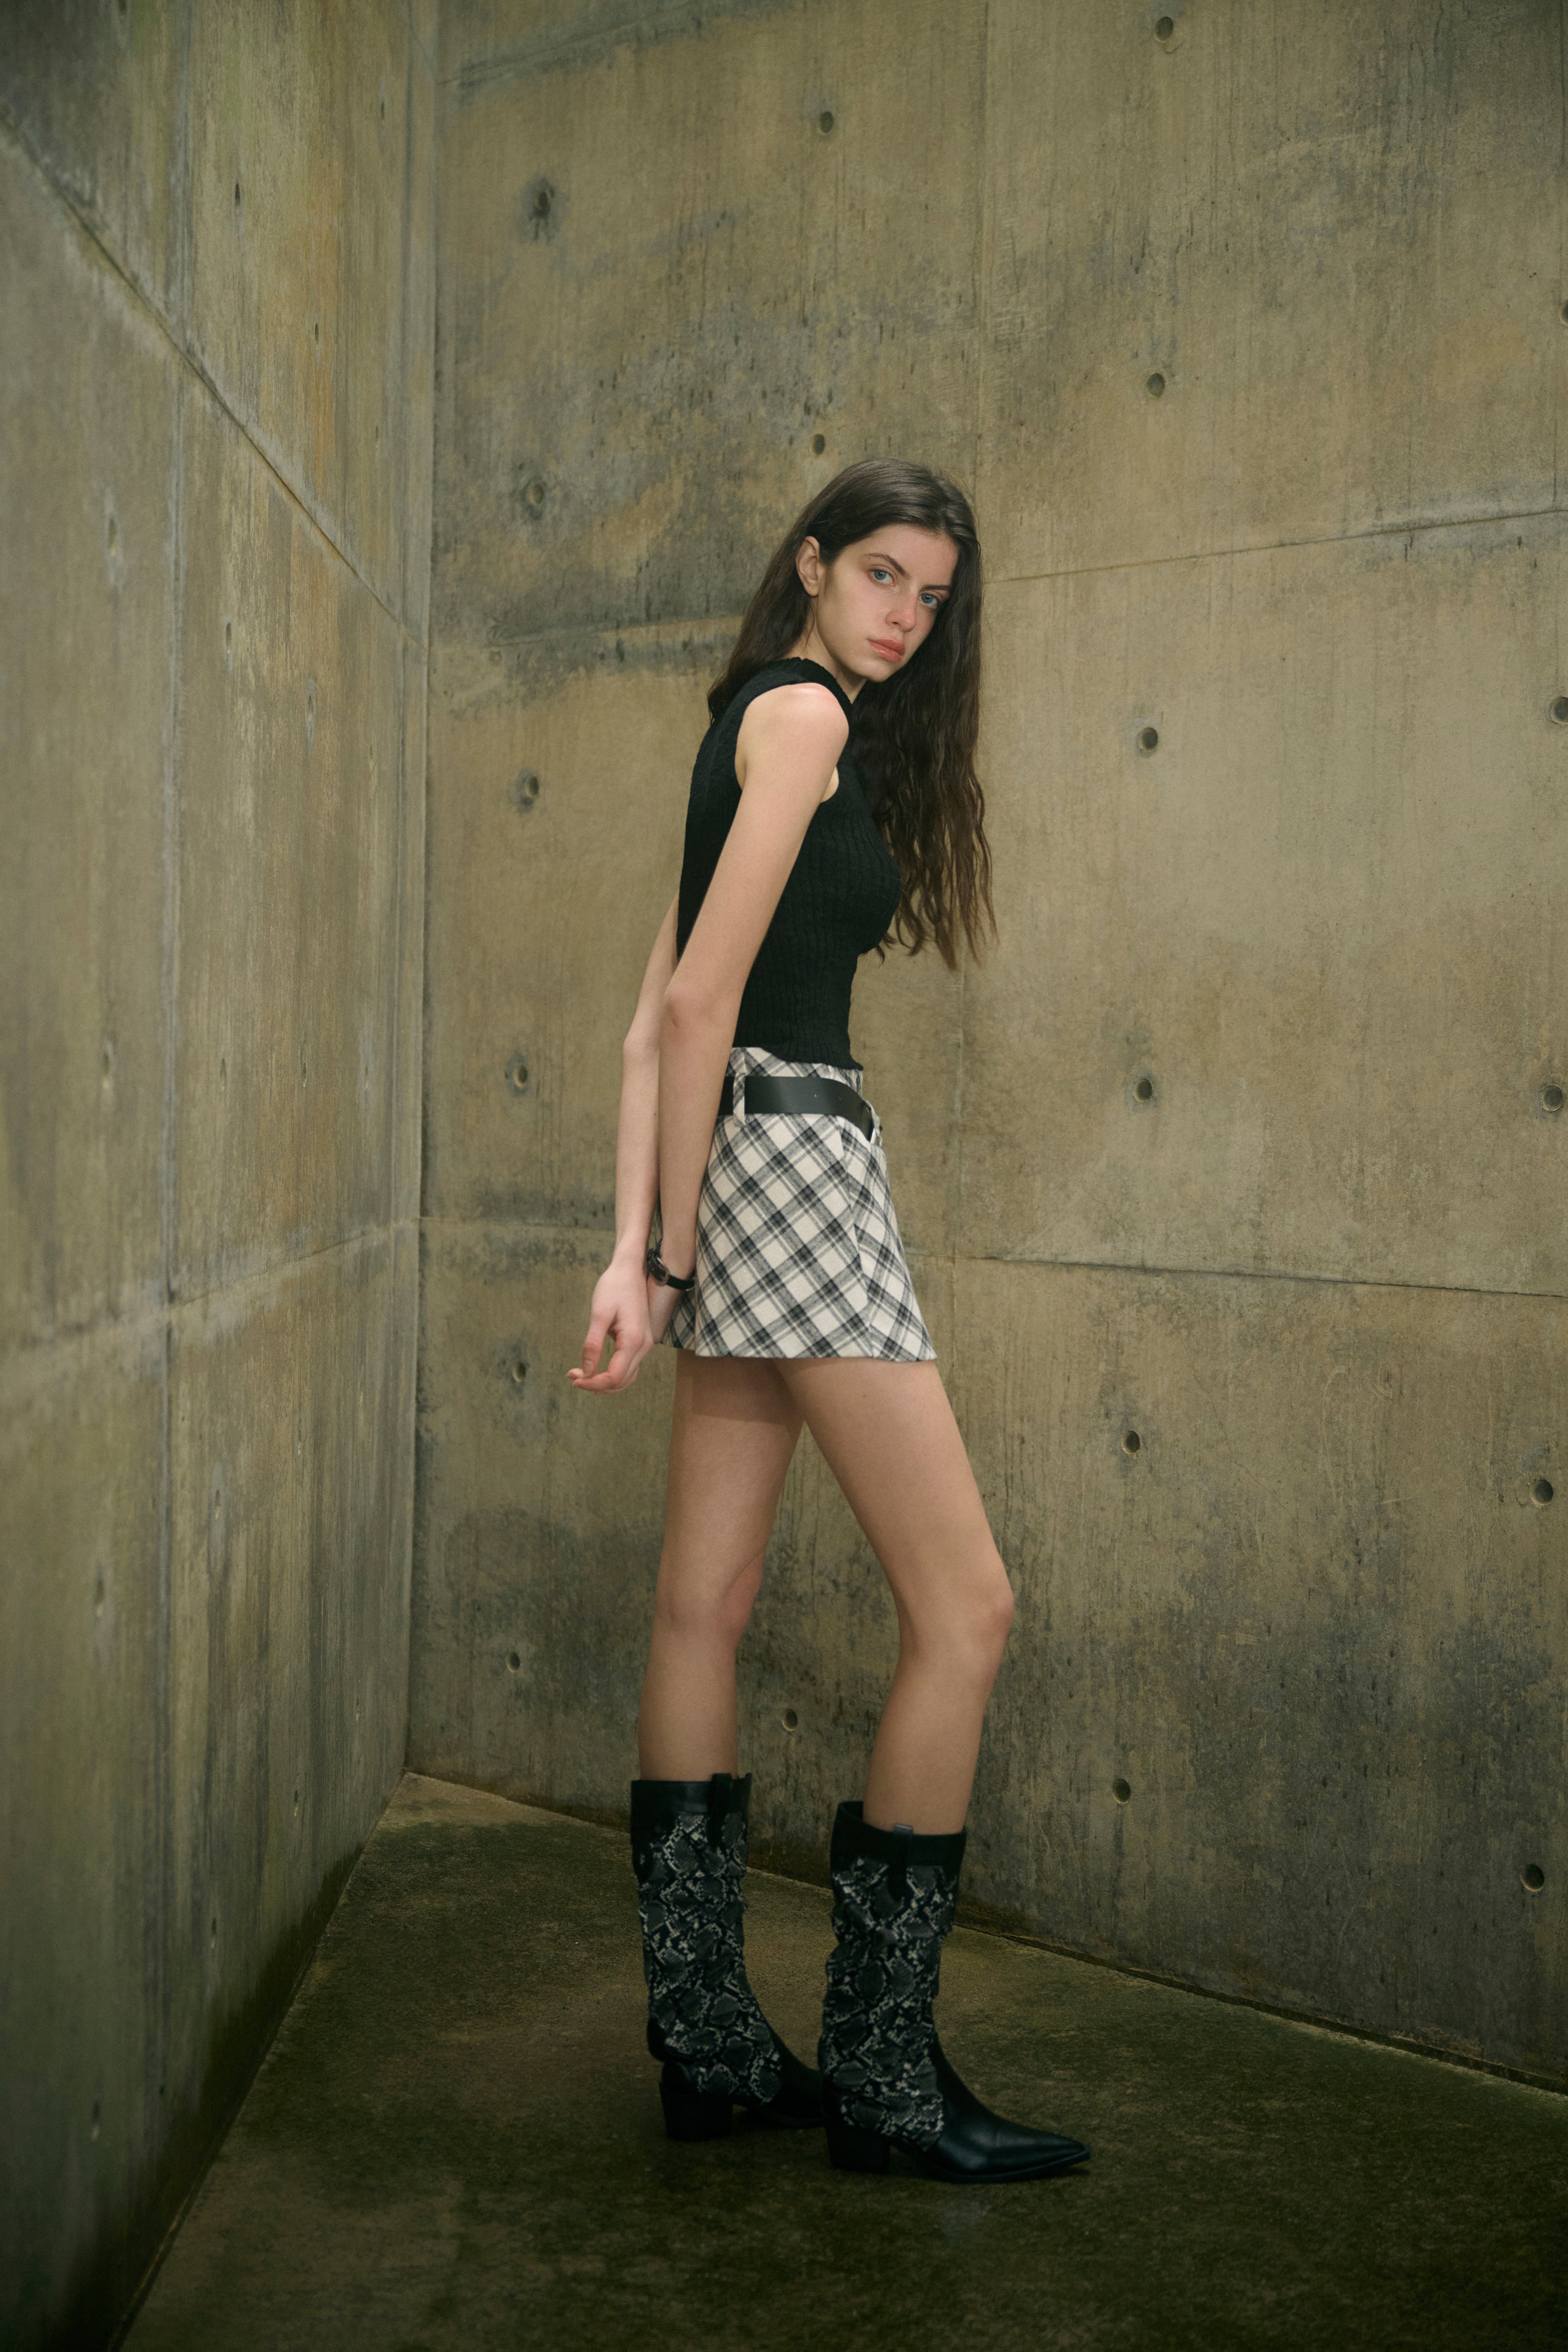 Checkered mini skirt